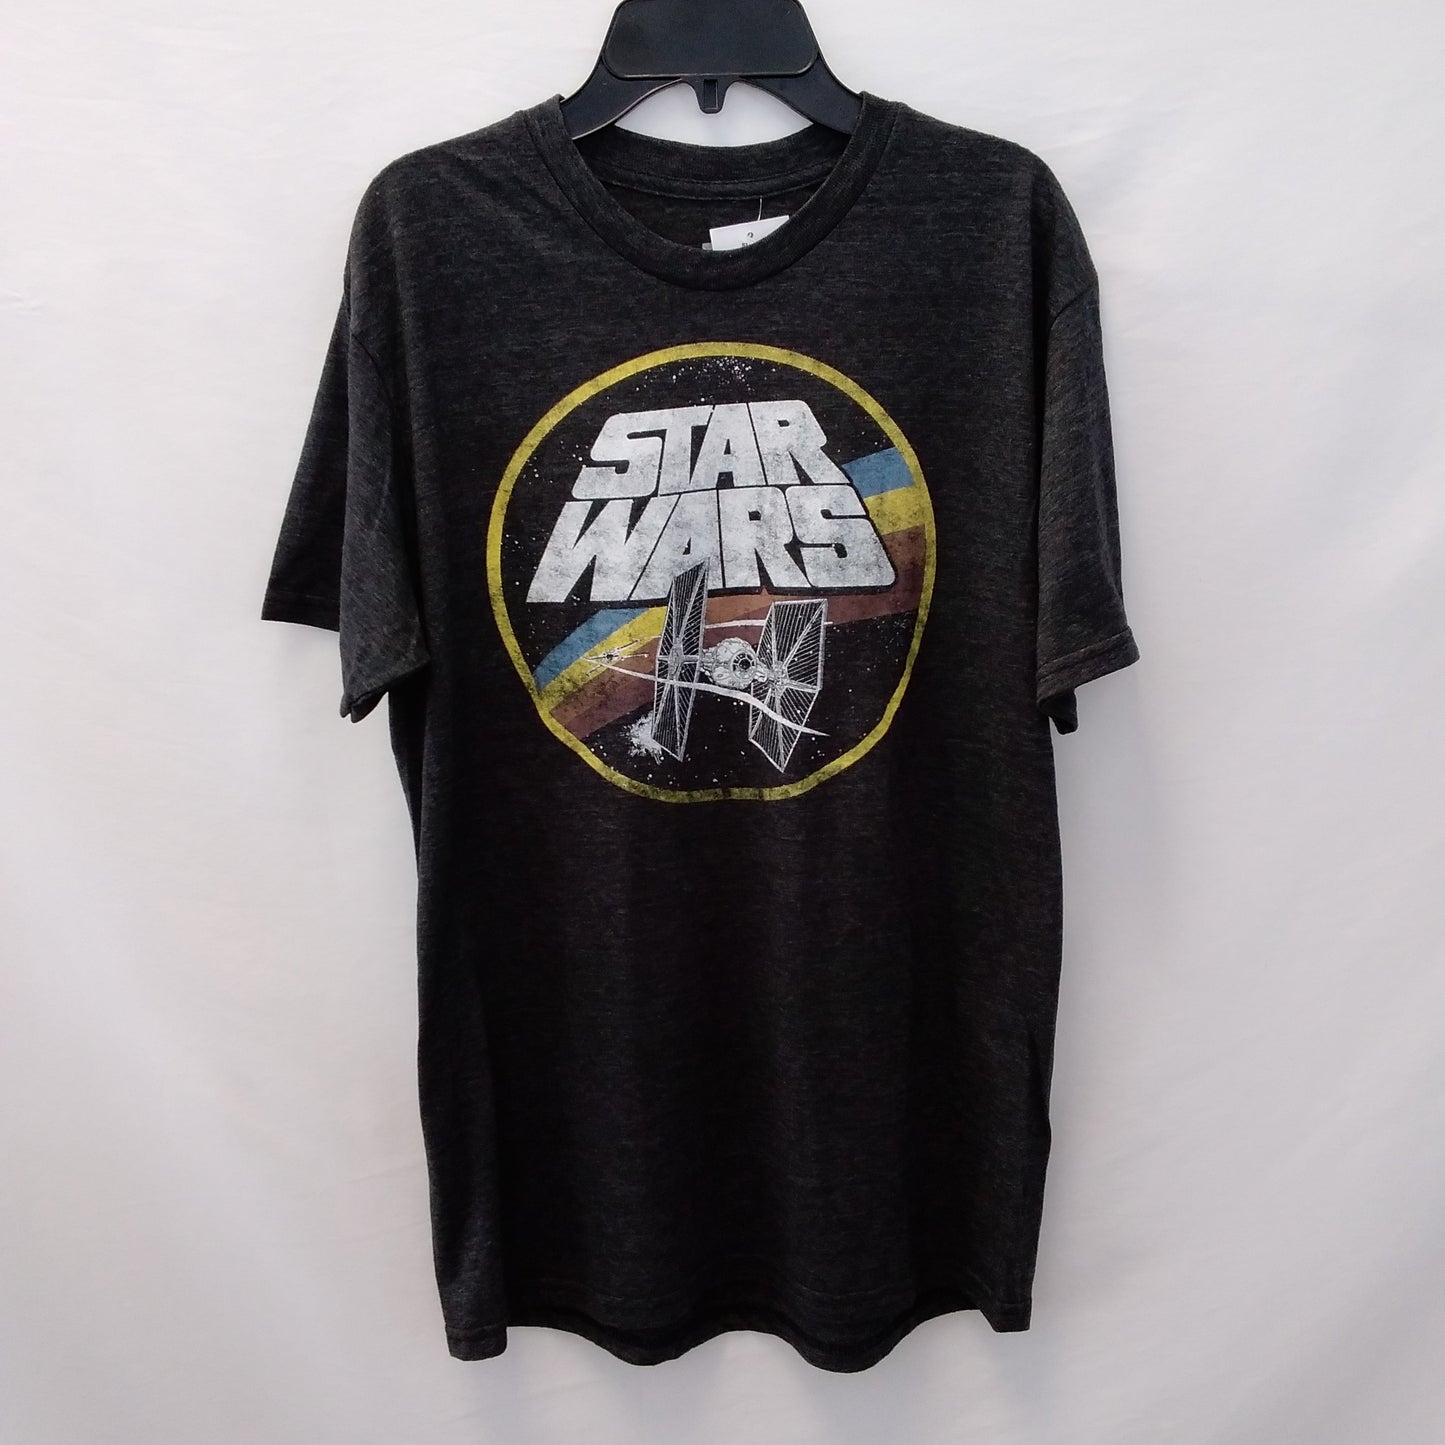 NWT - Star Wars Black Graffic Tee Shirt - Medium